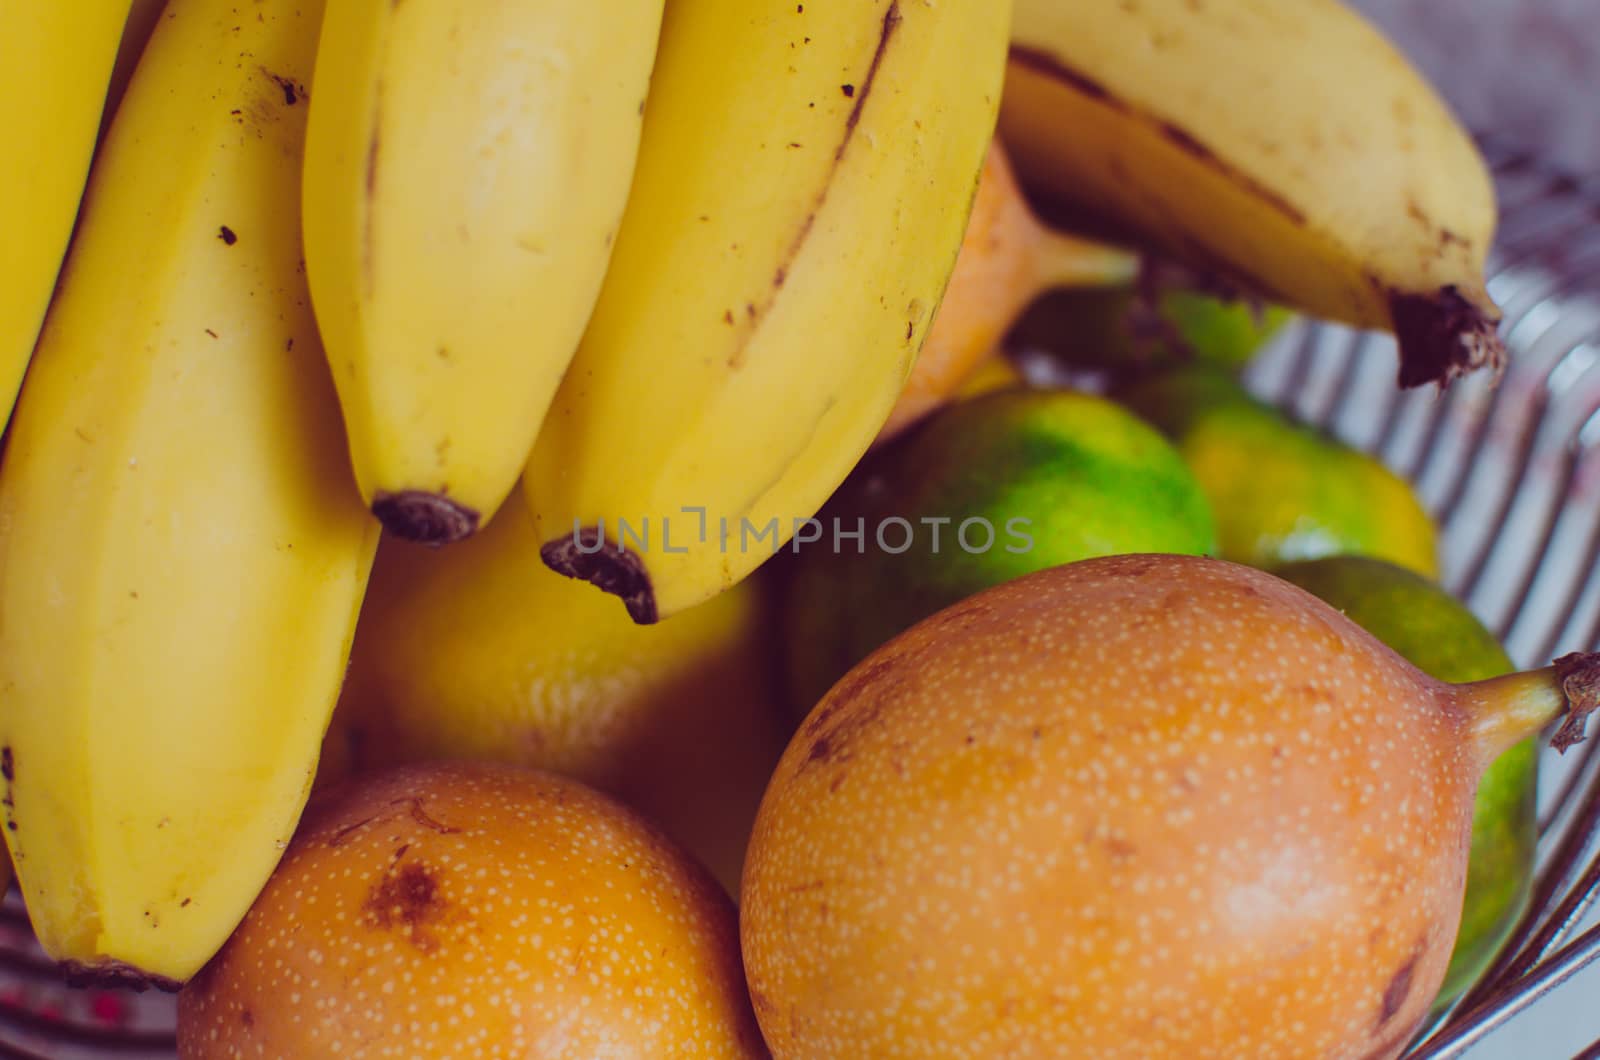 Fruits like banana, tangerine, pomegranate